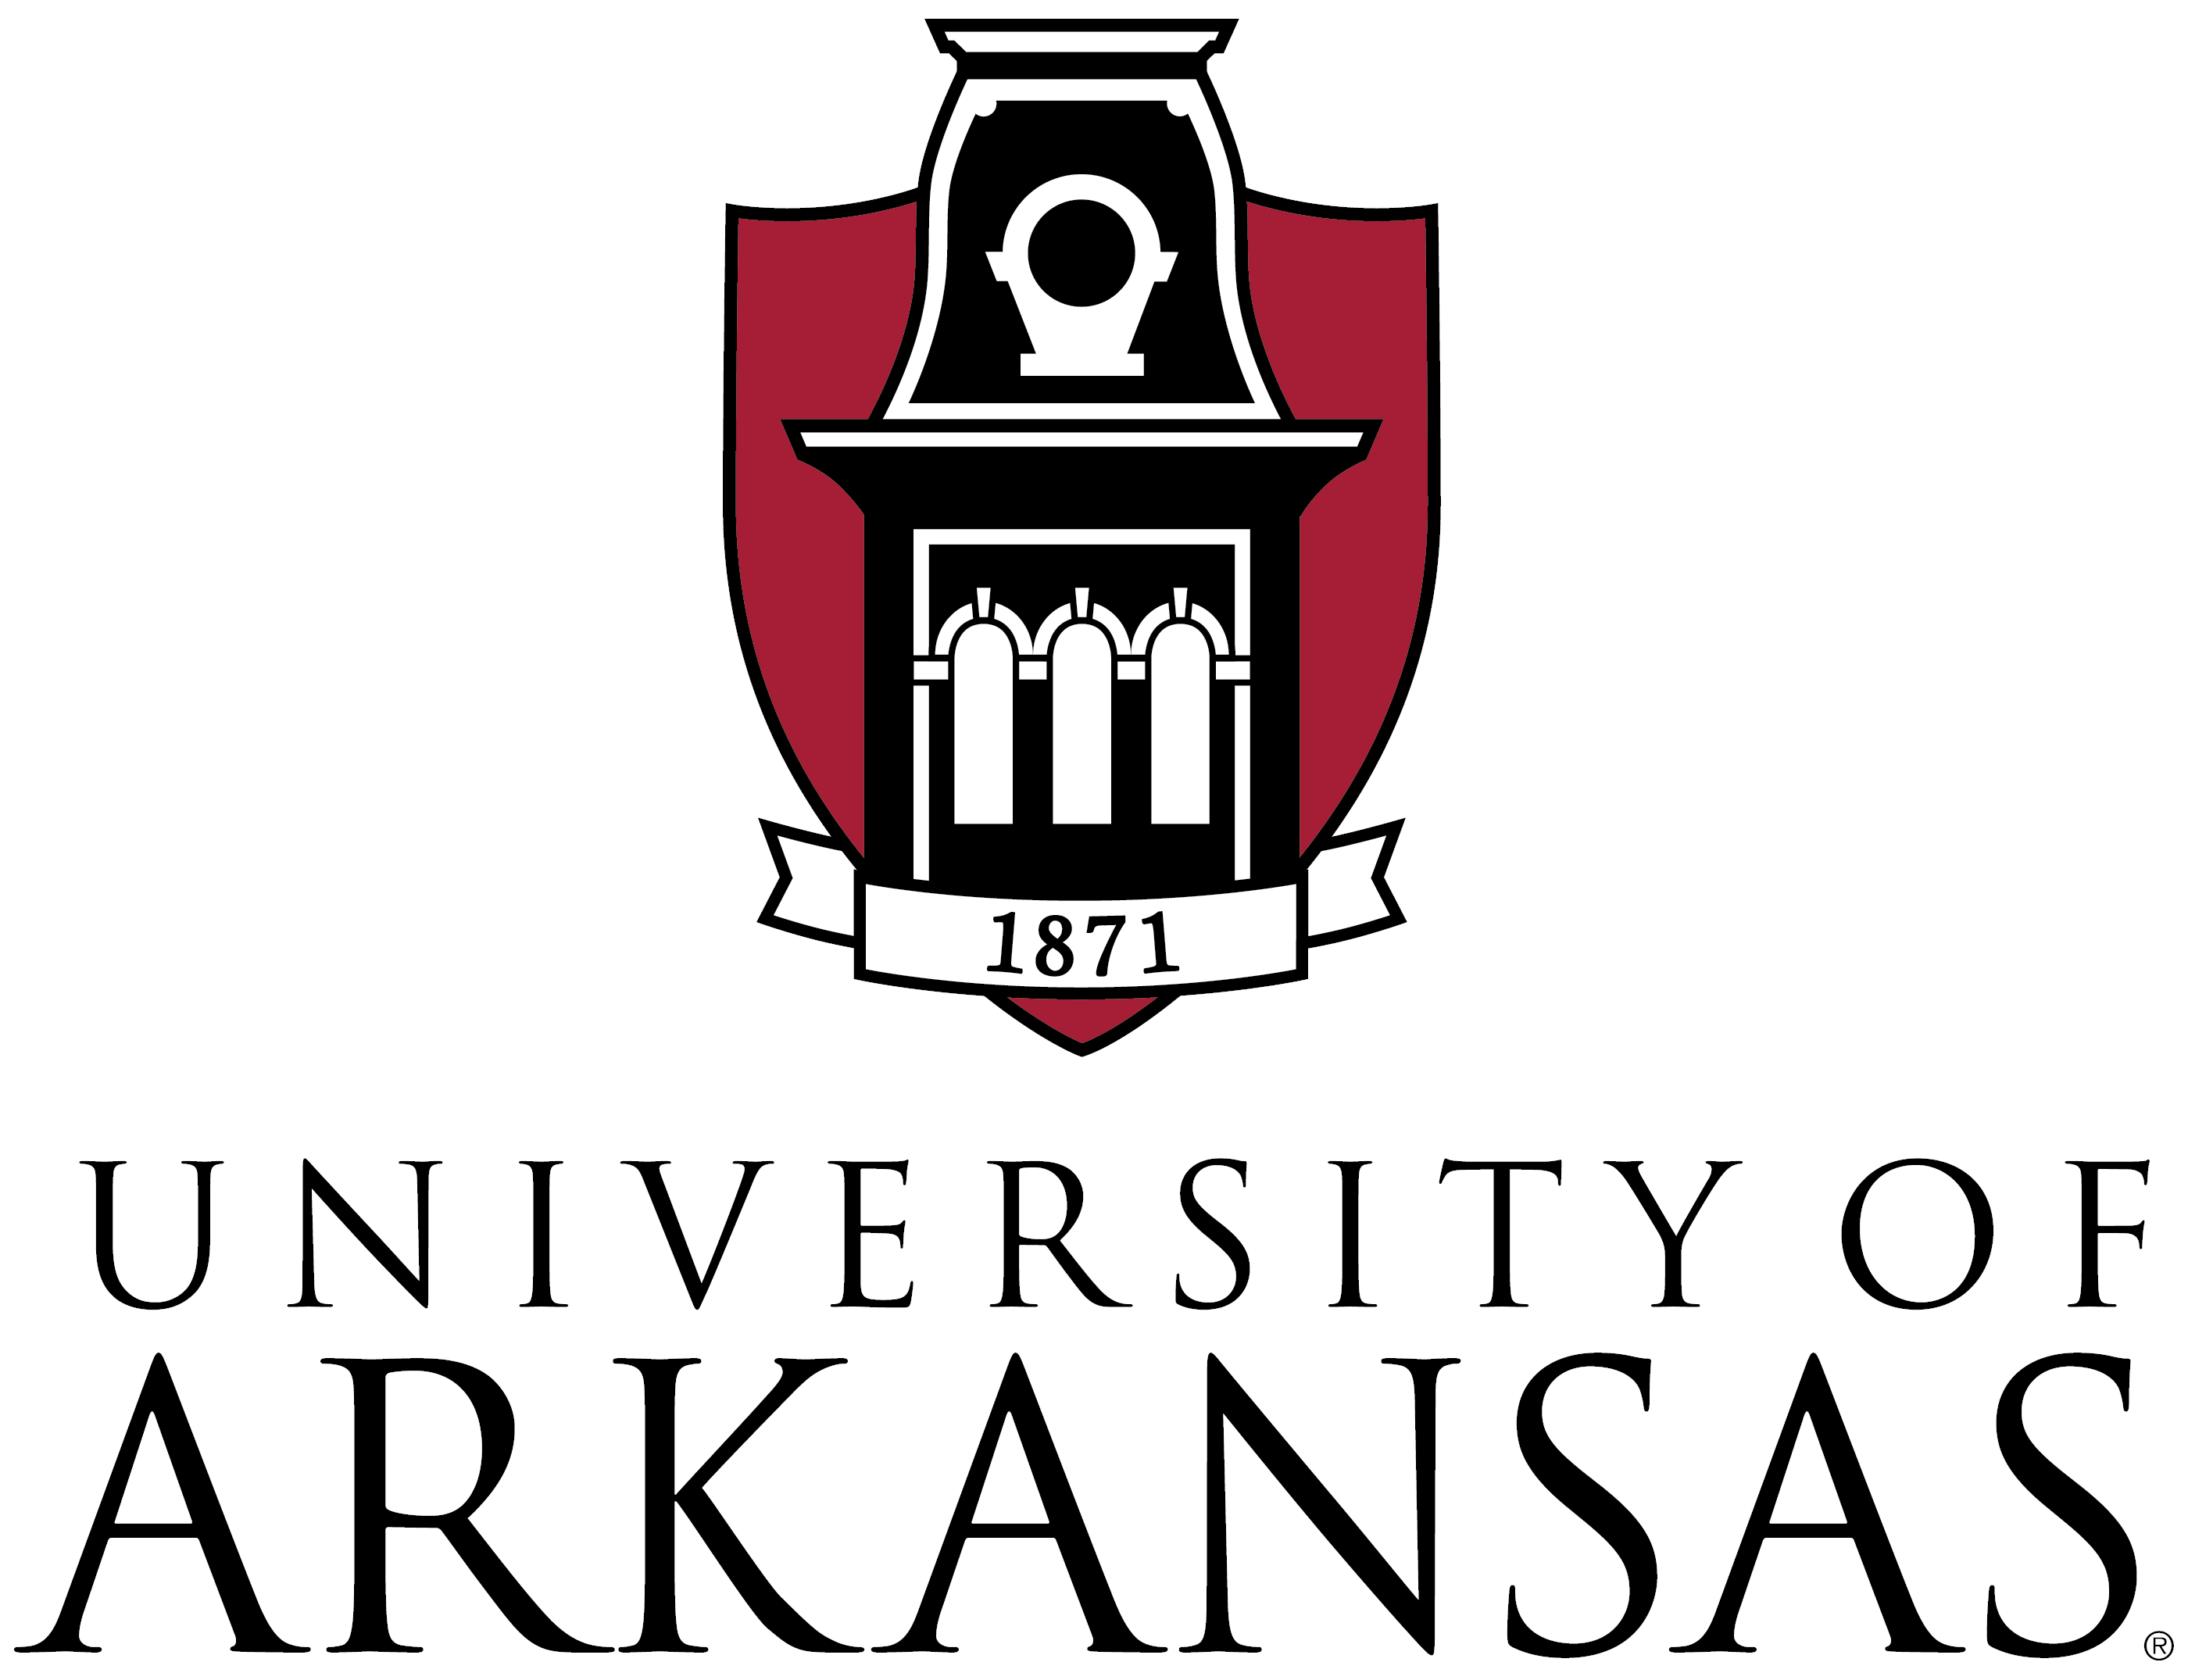 University of Arkansas - Университет штата Арканзас - Университет штата Арканзас